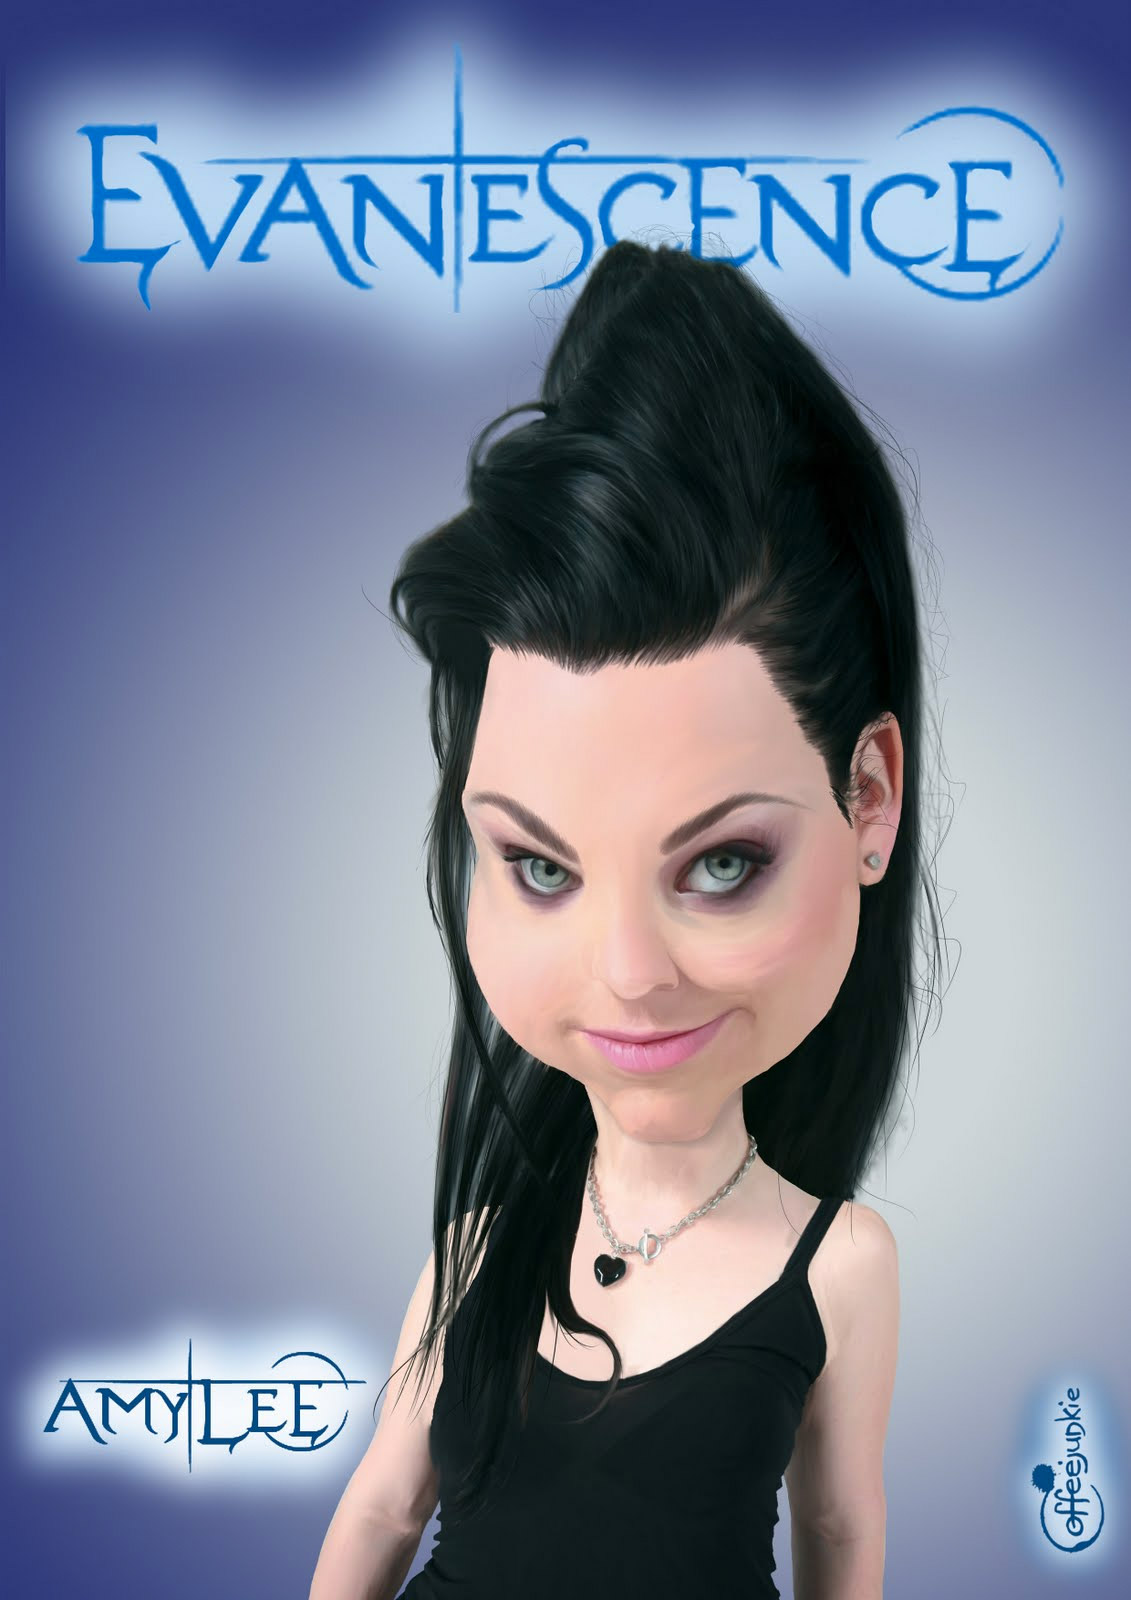 Caricatura de Amy Lee de Evanescence